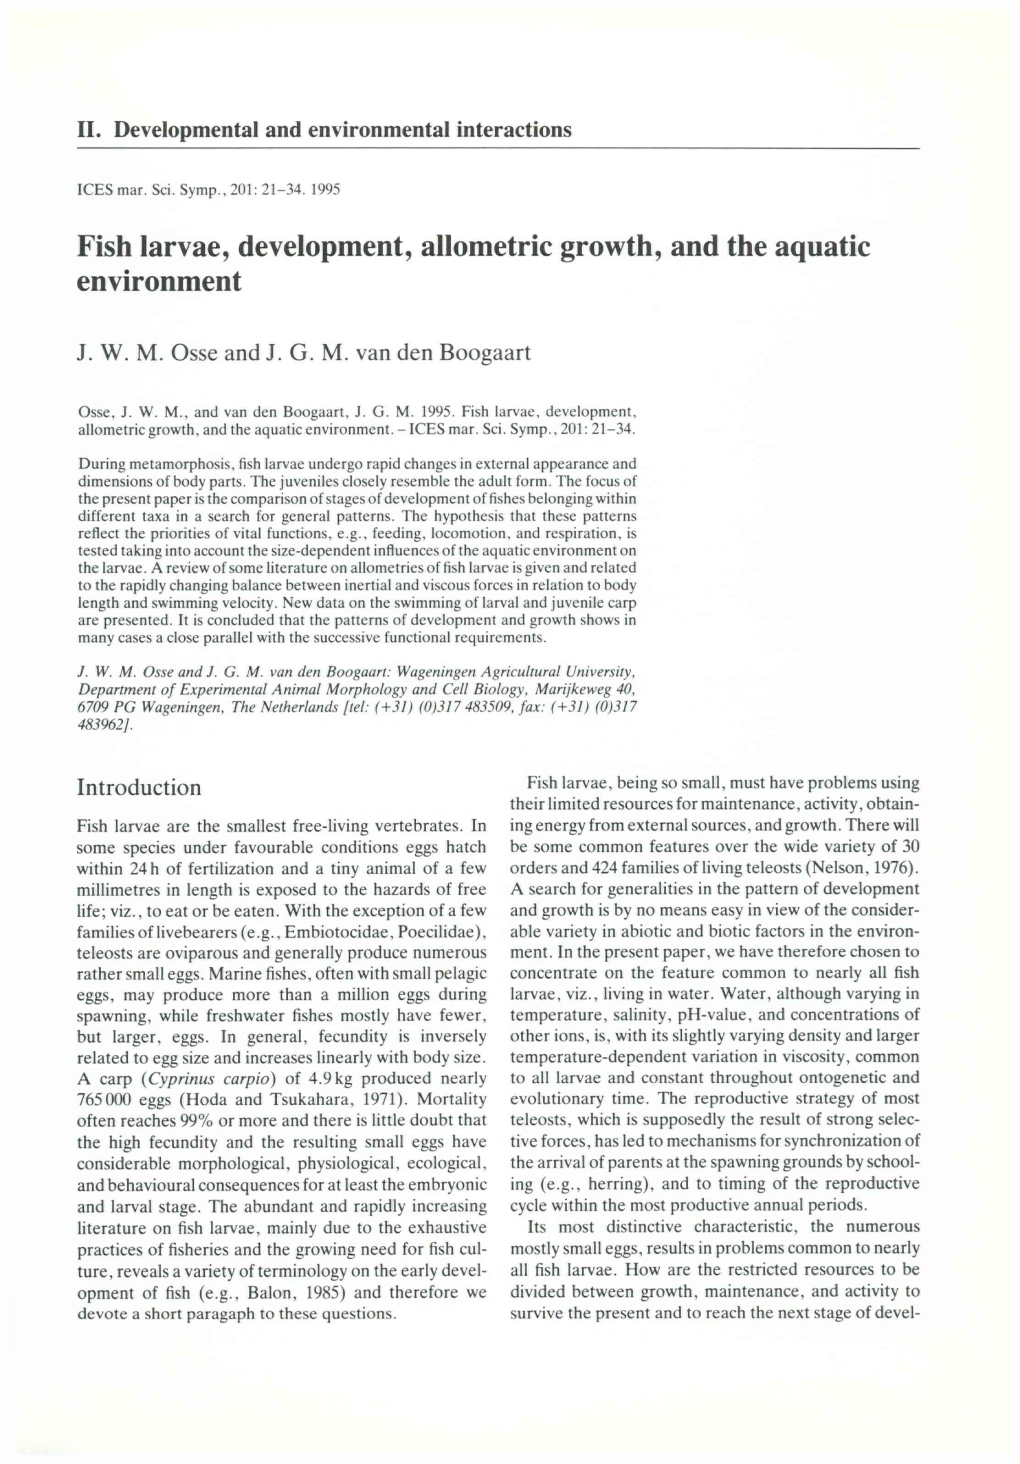 Fish Larvae, Development, Allometric Growth, and the Aquatic Environment